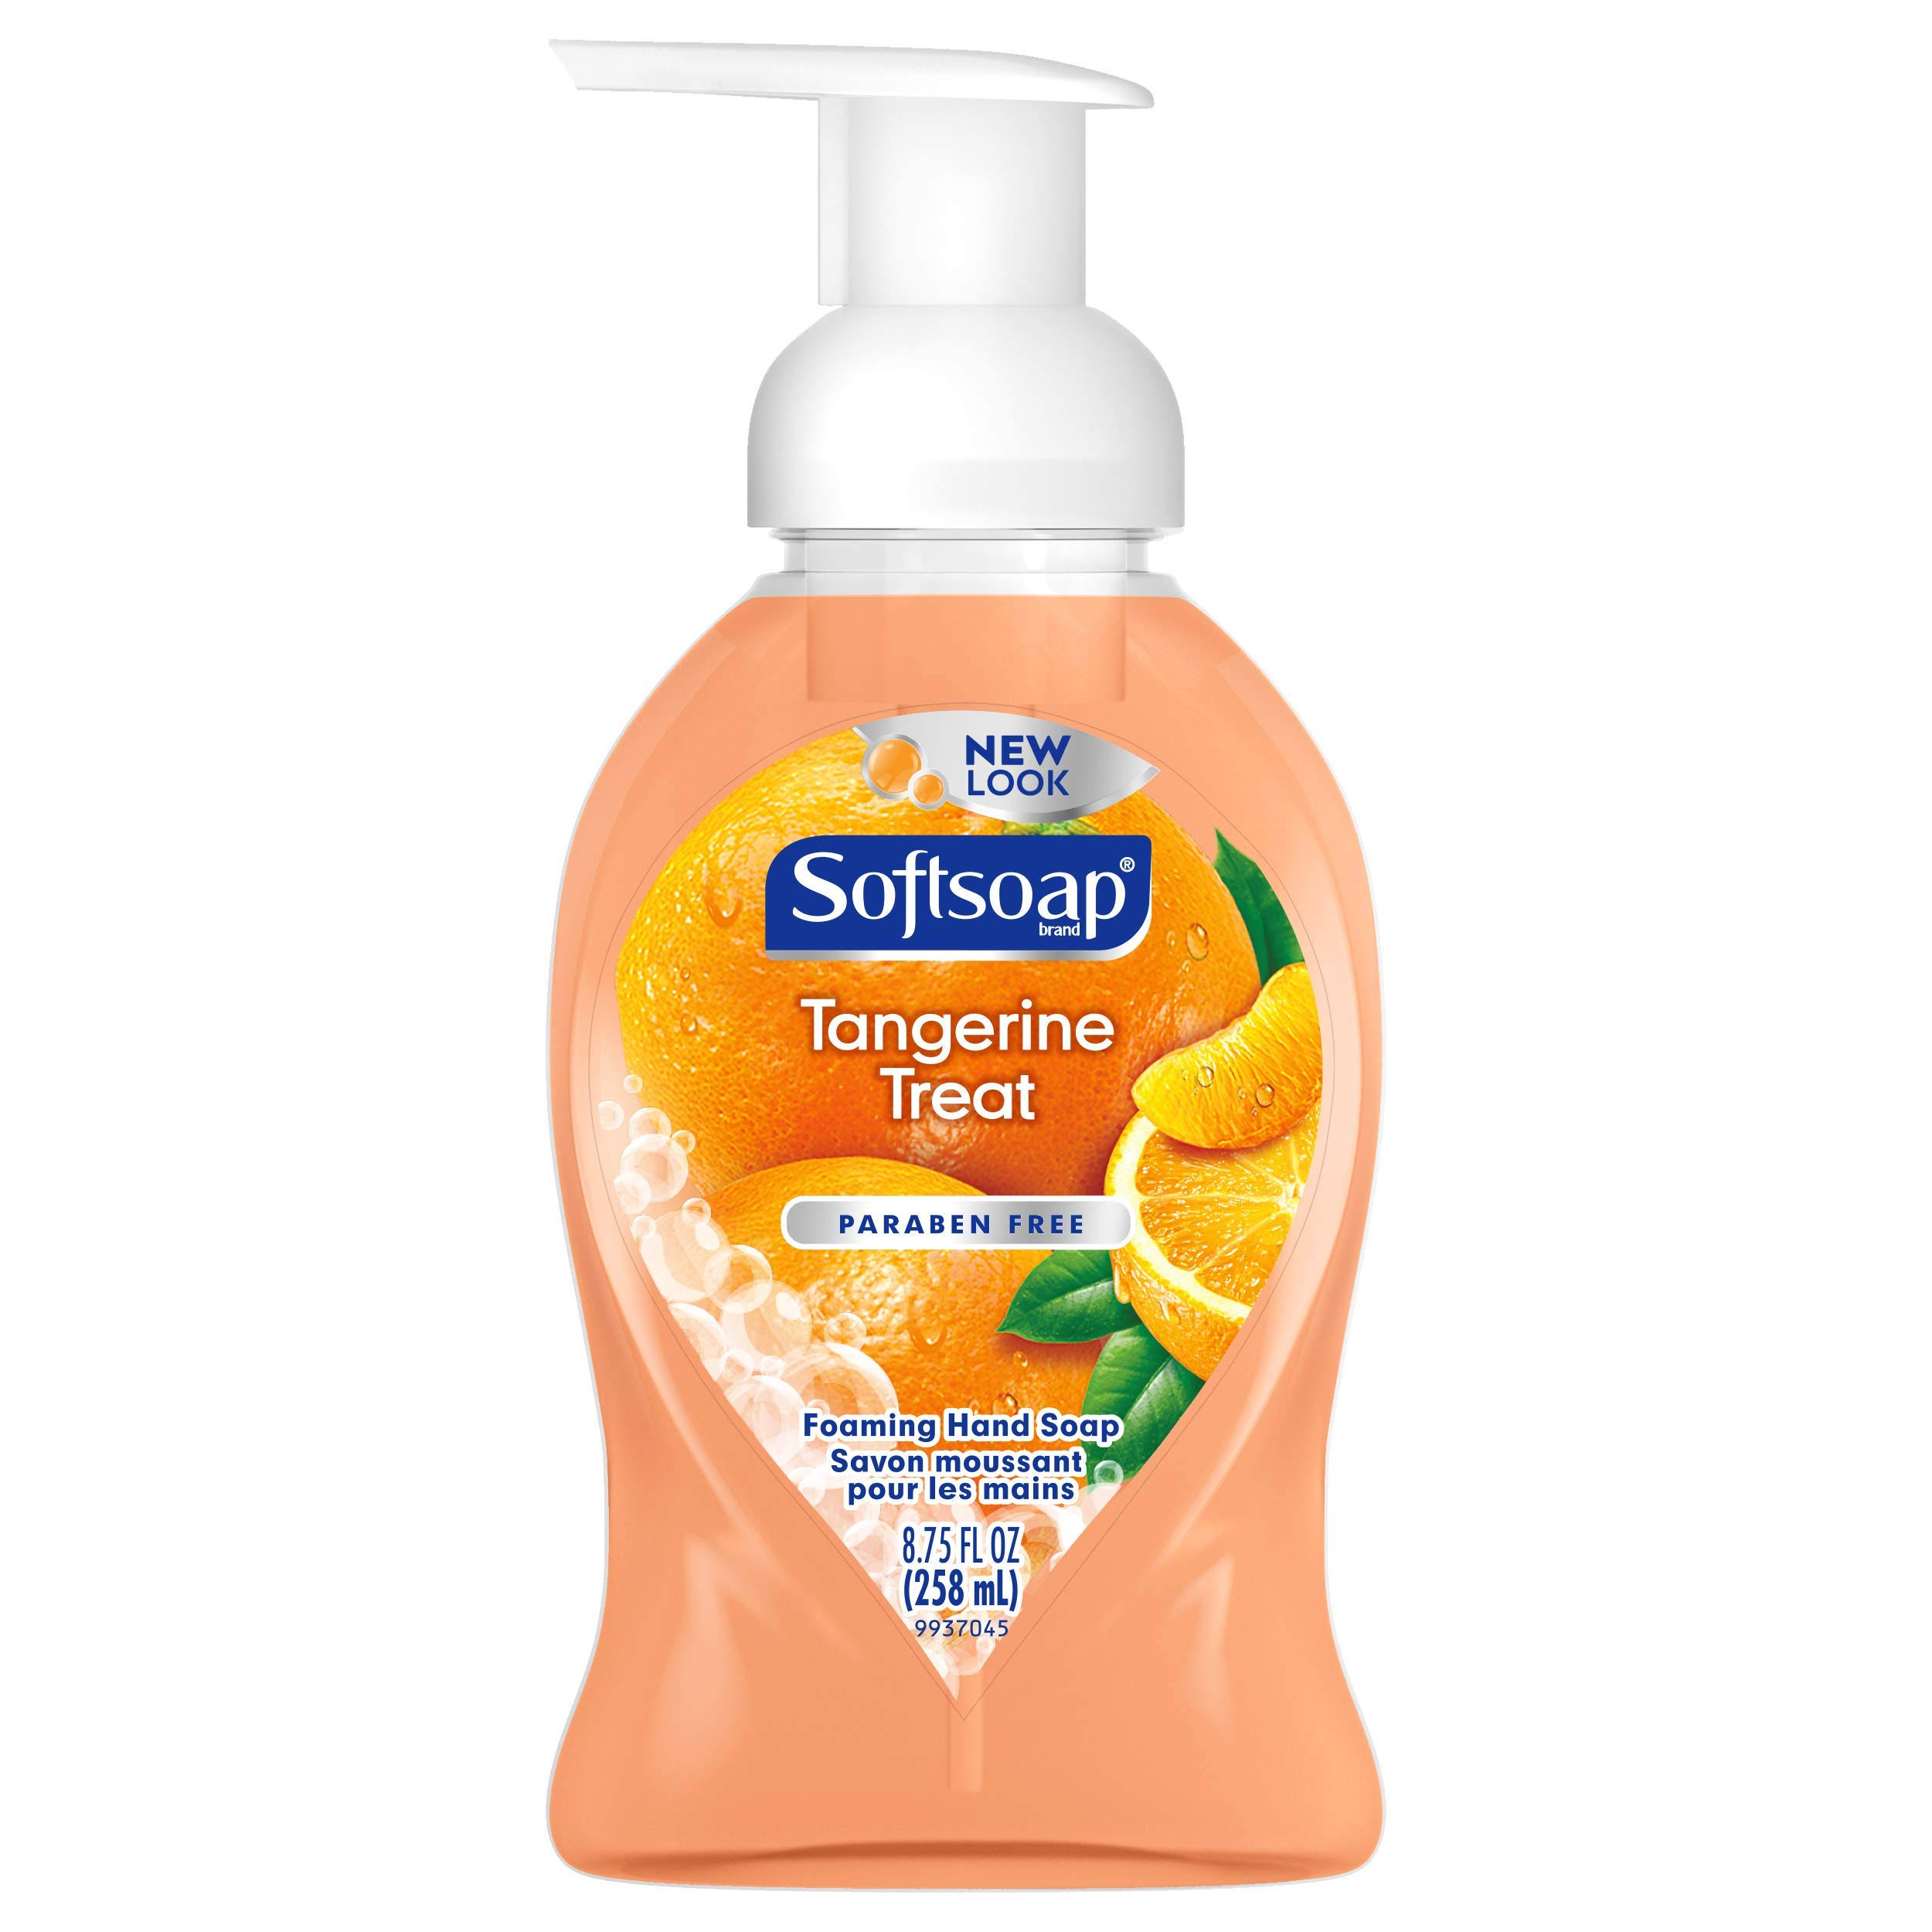 Softsoap Foaming Hand Soap, Tangerine Treat, 258 mL